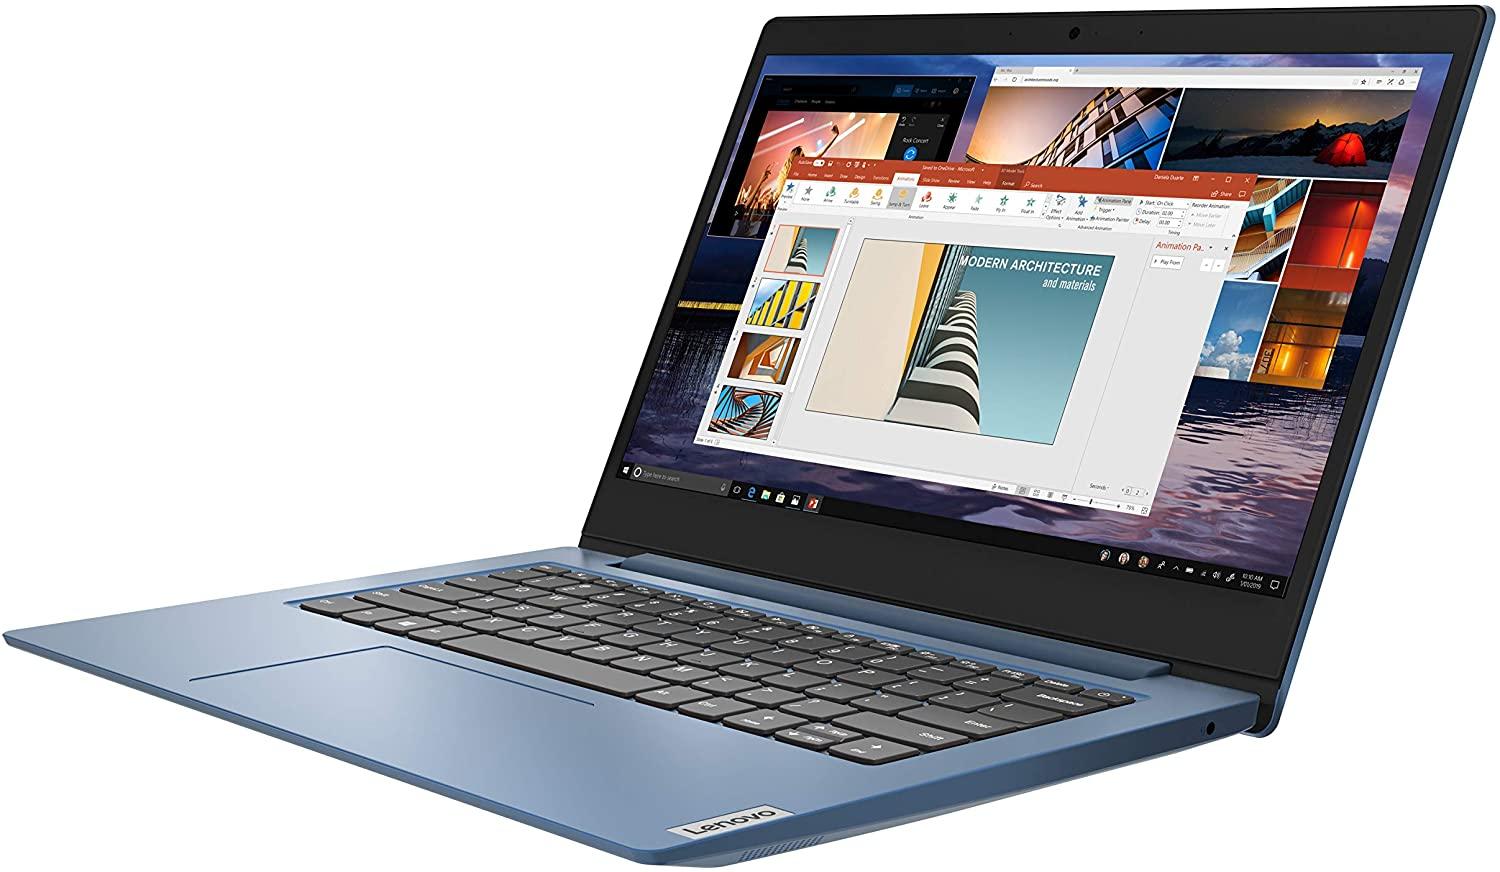 Lenovo IdeaPad 1 14in Intel Celeron 4GB Notebook Laptop for $199 Shipped